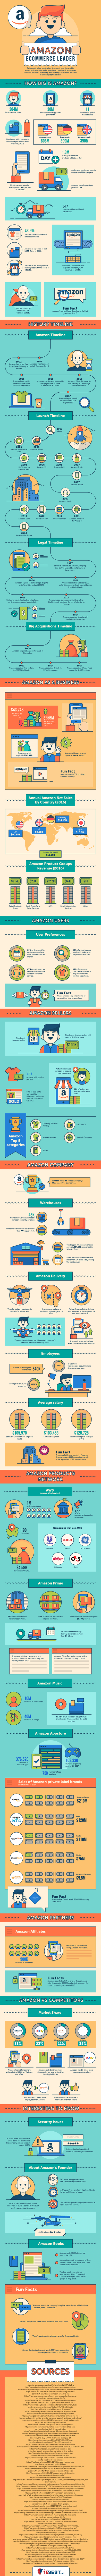 Amazon The eCommerce Leader